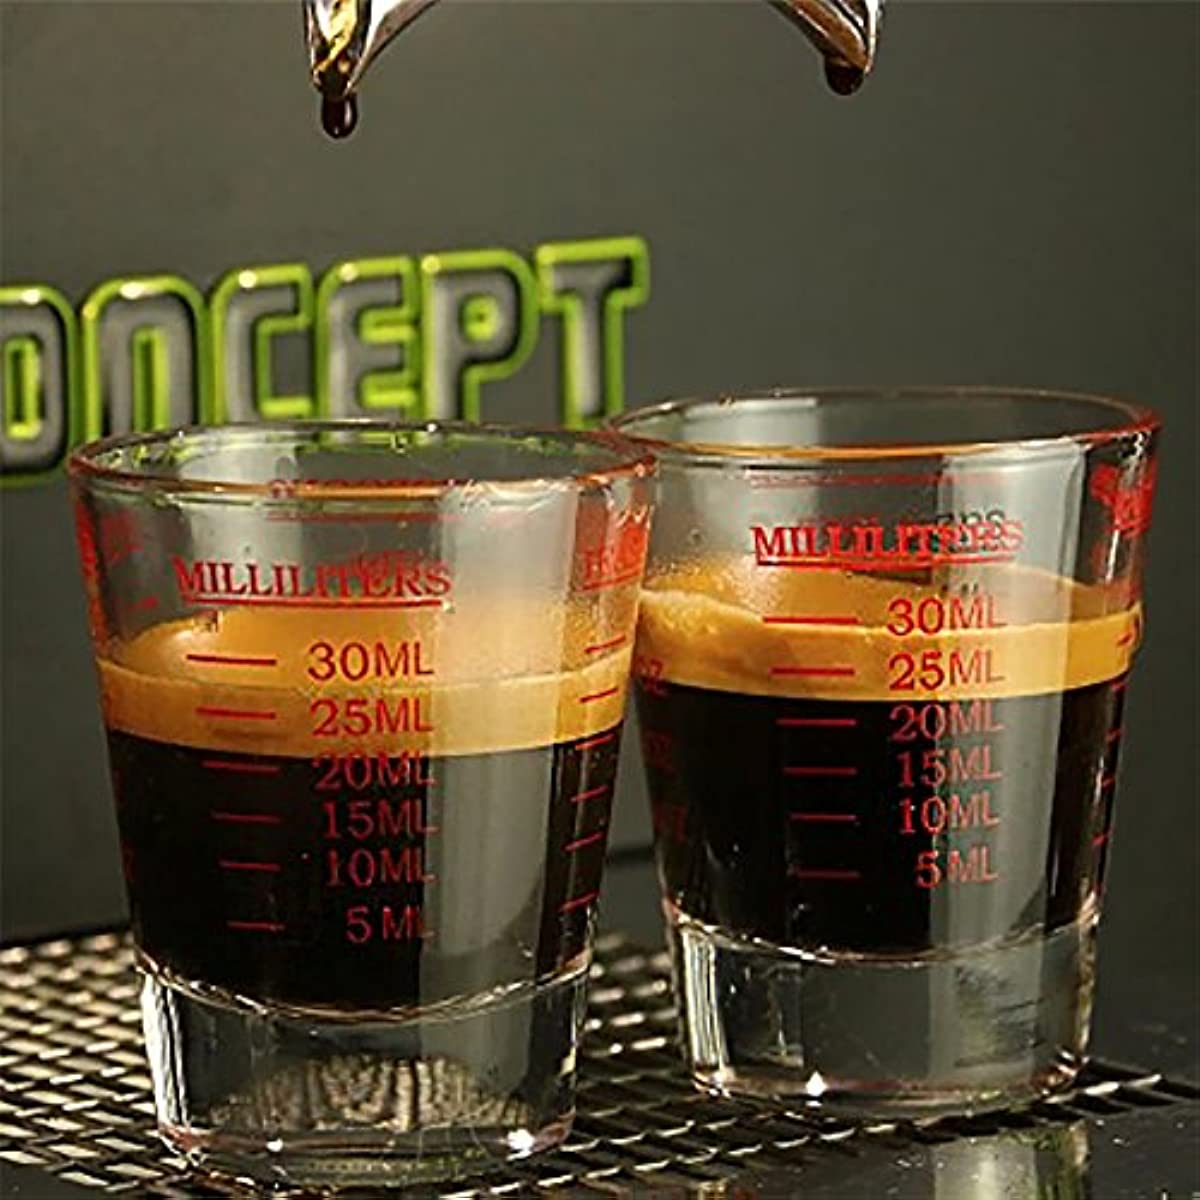 2 Pack Shot Glasses Measuring cup Espresso Shot Glass Liquid Heavy